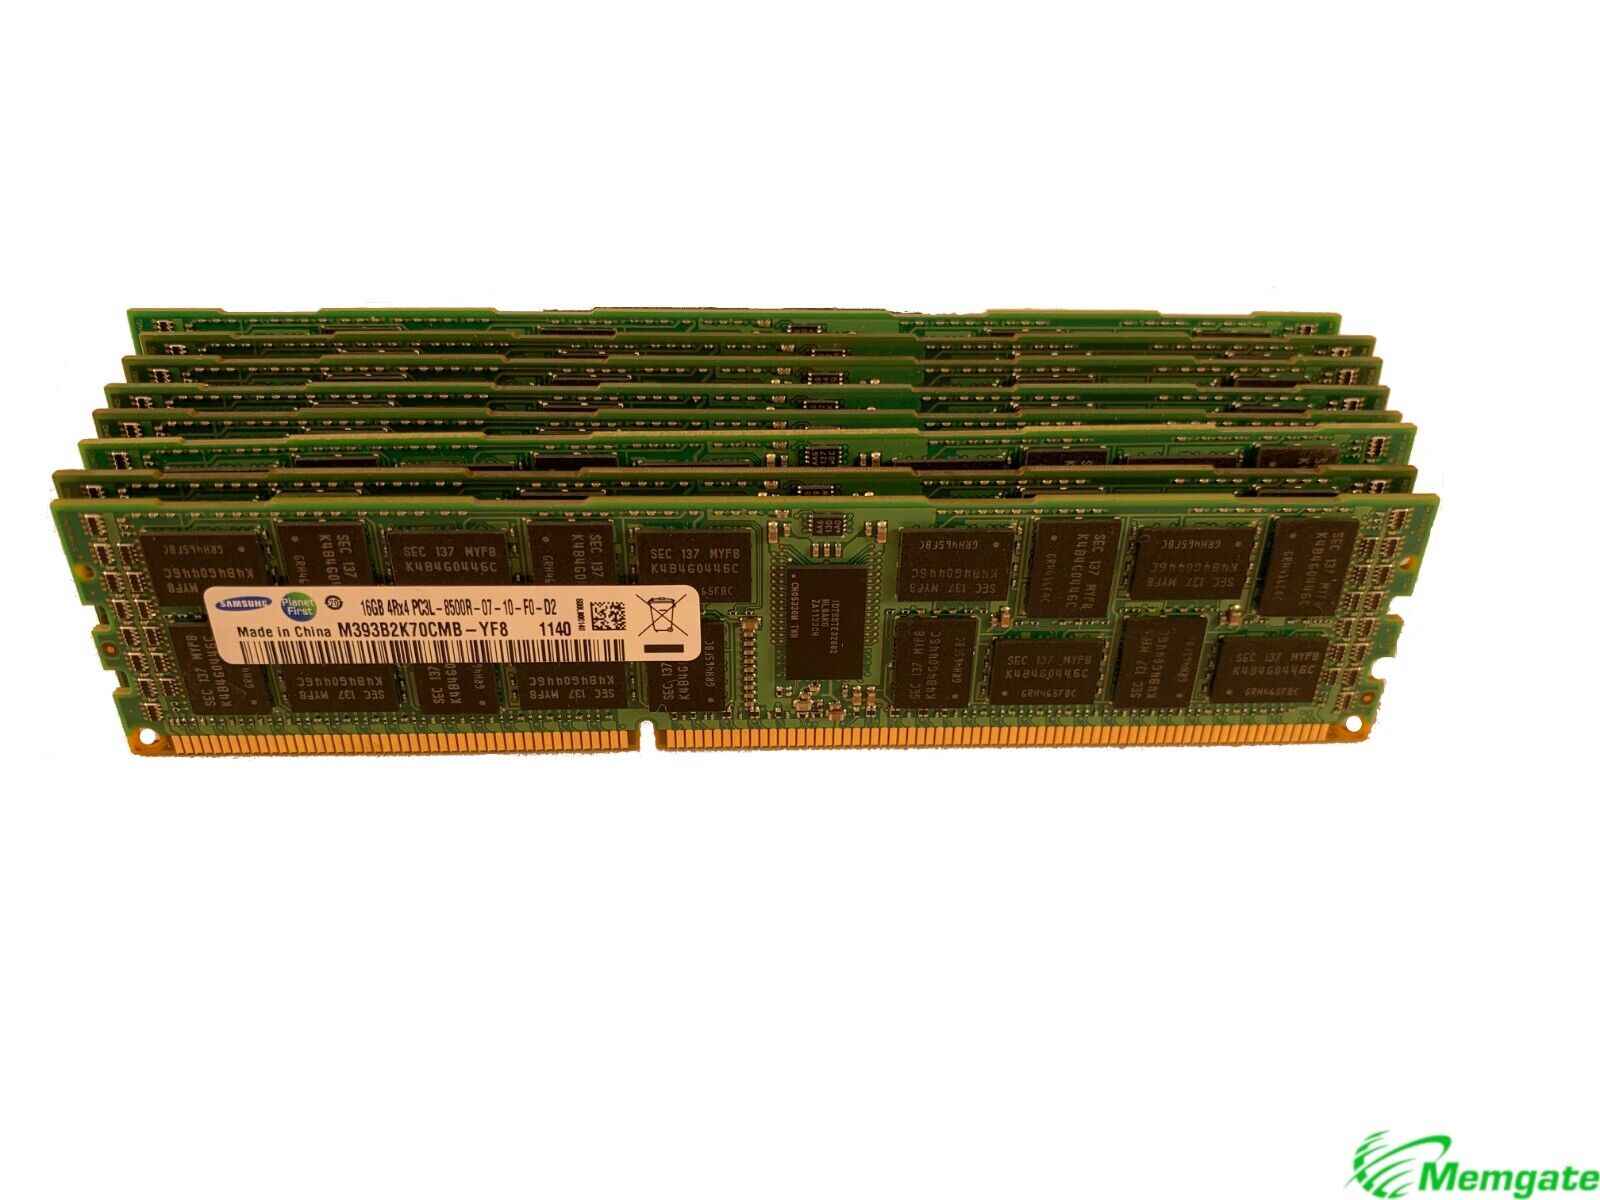 49Y1418 64GB (4 x 16GB) PC3L-8500 DDR3-1066 Memory IBM System x3850 X5 7143